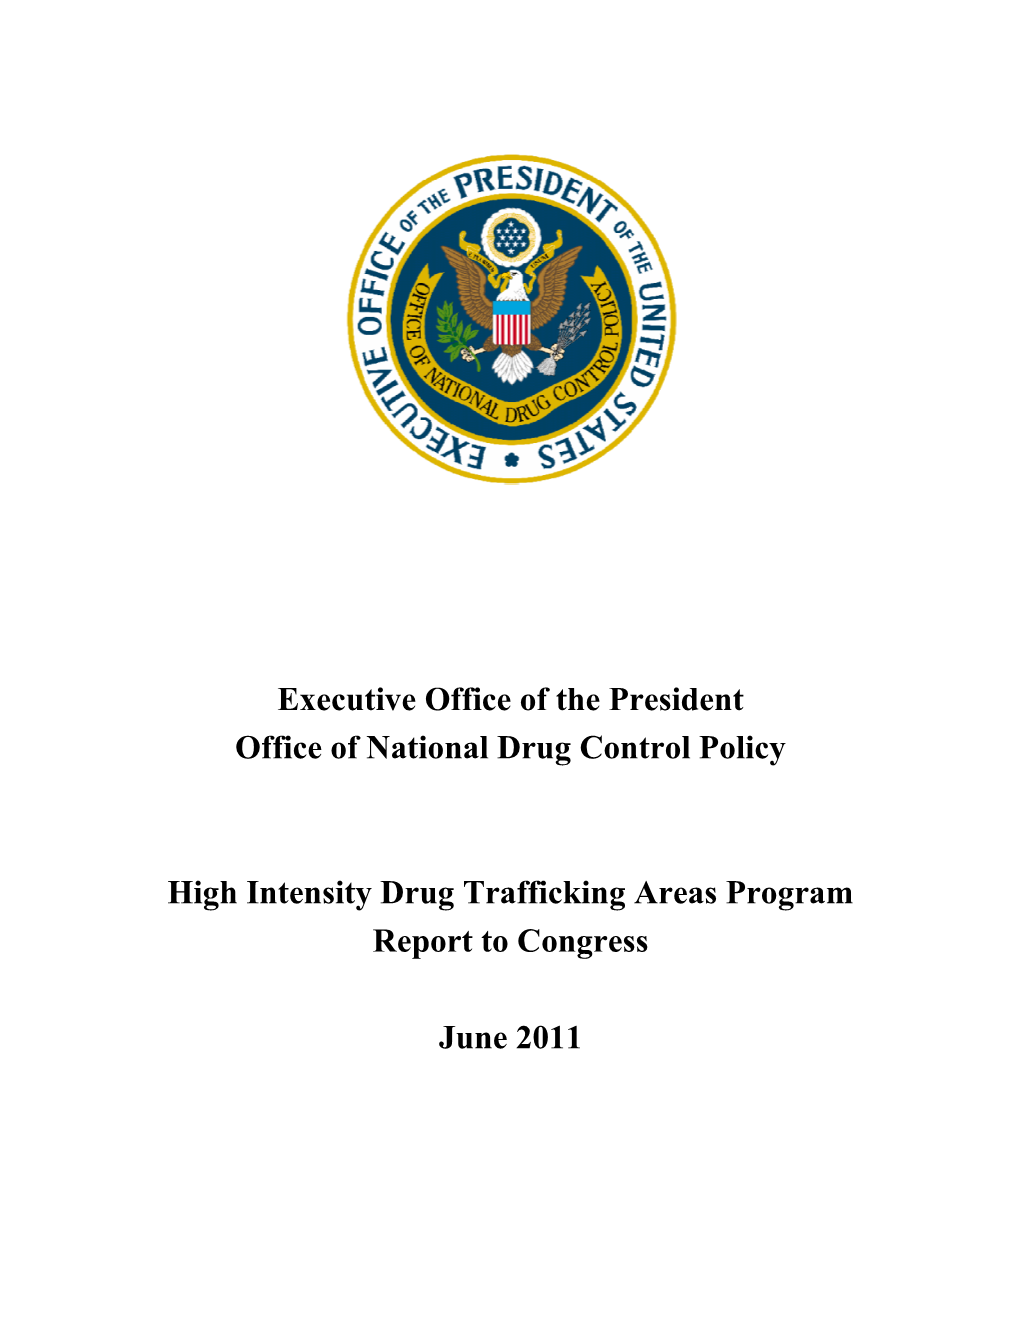 2011 High Intensity Drug Trafficking Areas Program Report